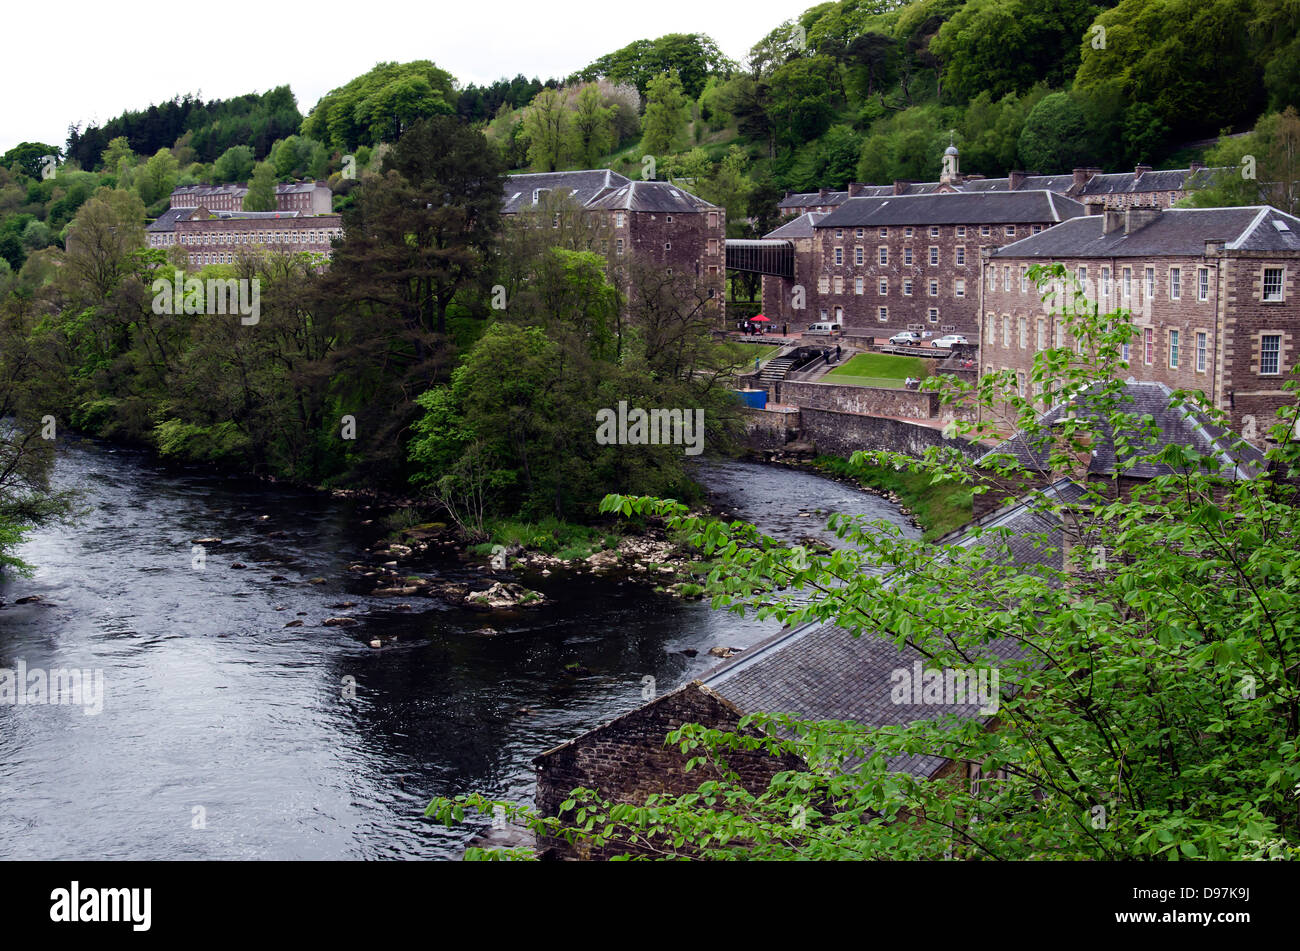 The historical village of New Lanark in South Lanarkshire, Scotland. Stock Photo